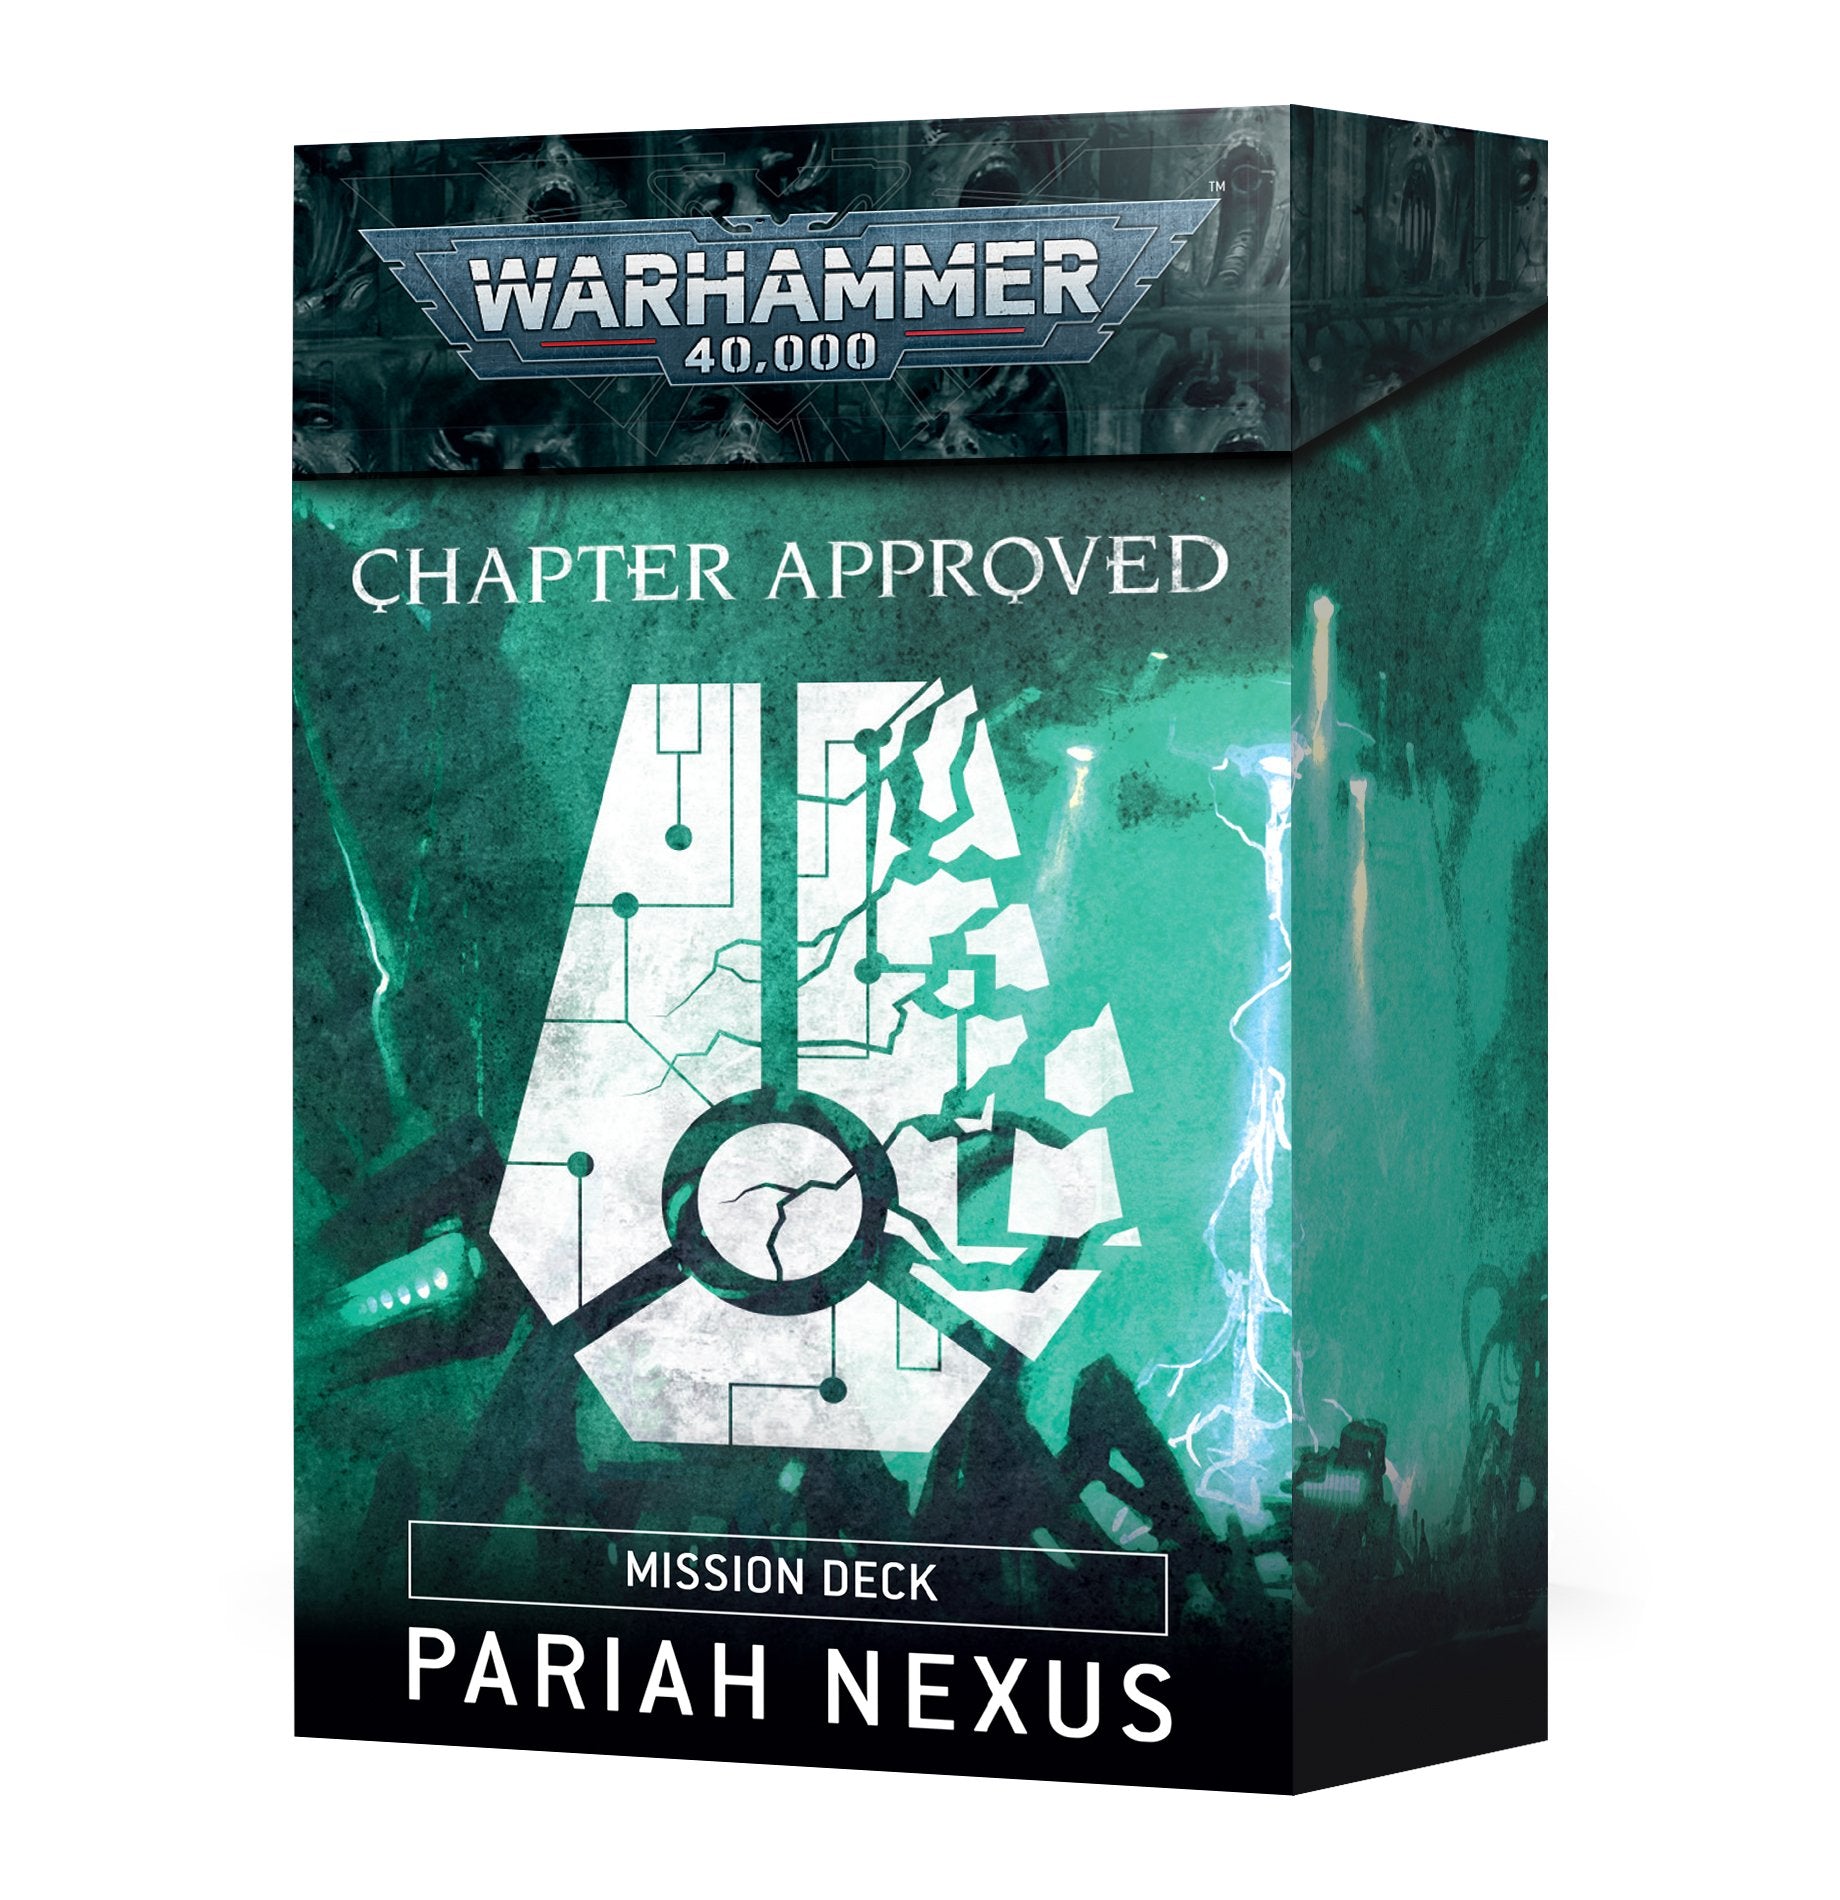 Chapter Approved Pariah Nexus Misson Deck - Warhammer 40k